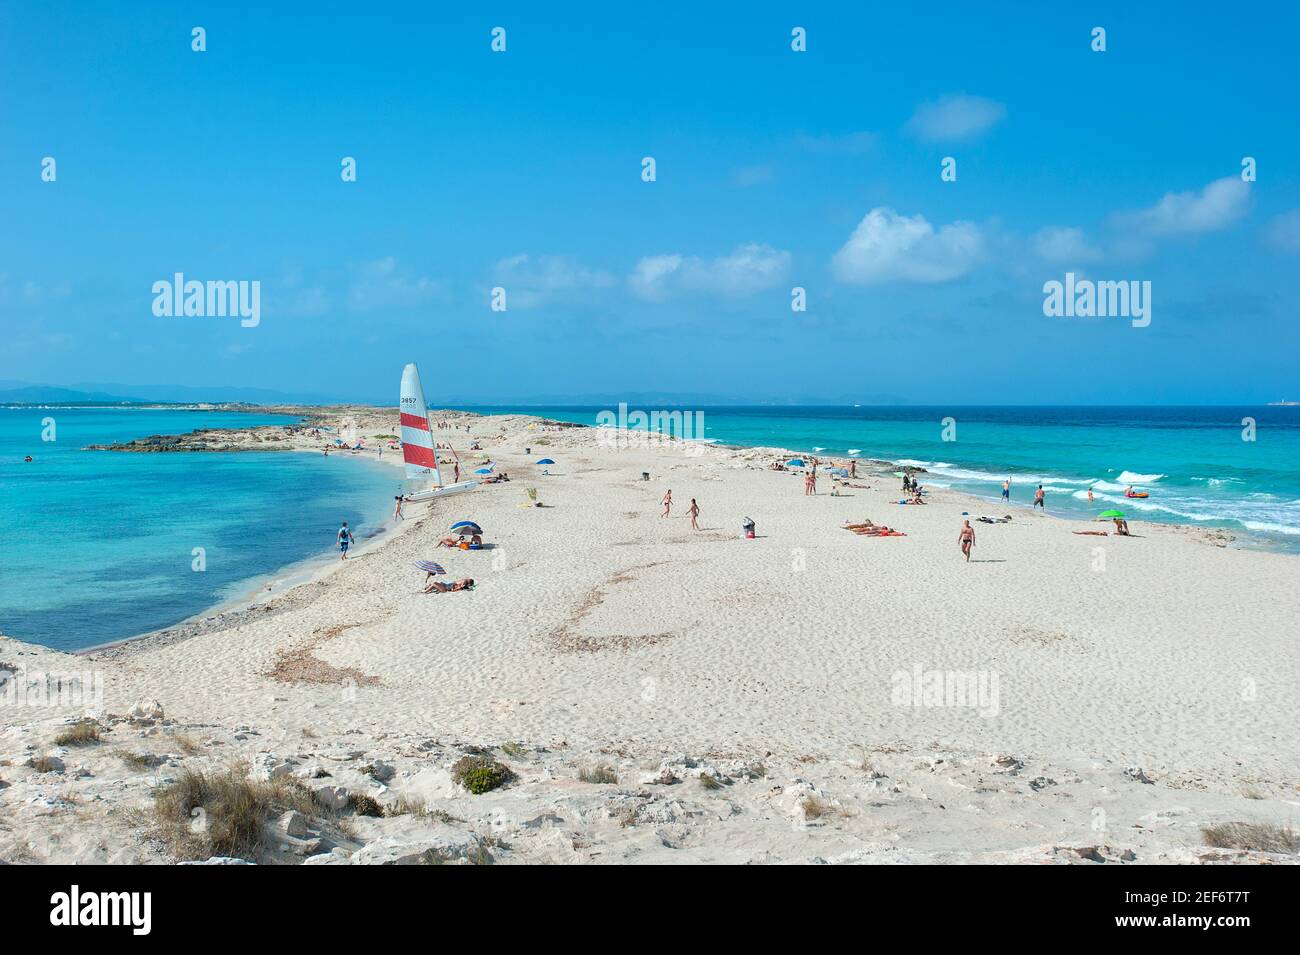 Playa de ses illetes, Formentera, Balearics, Spain Stock Photo